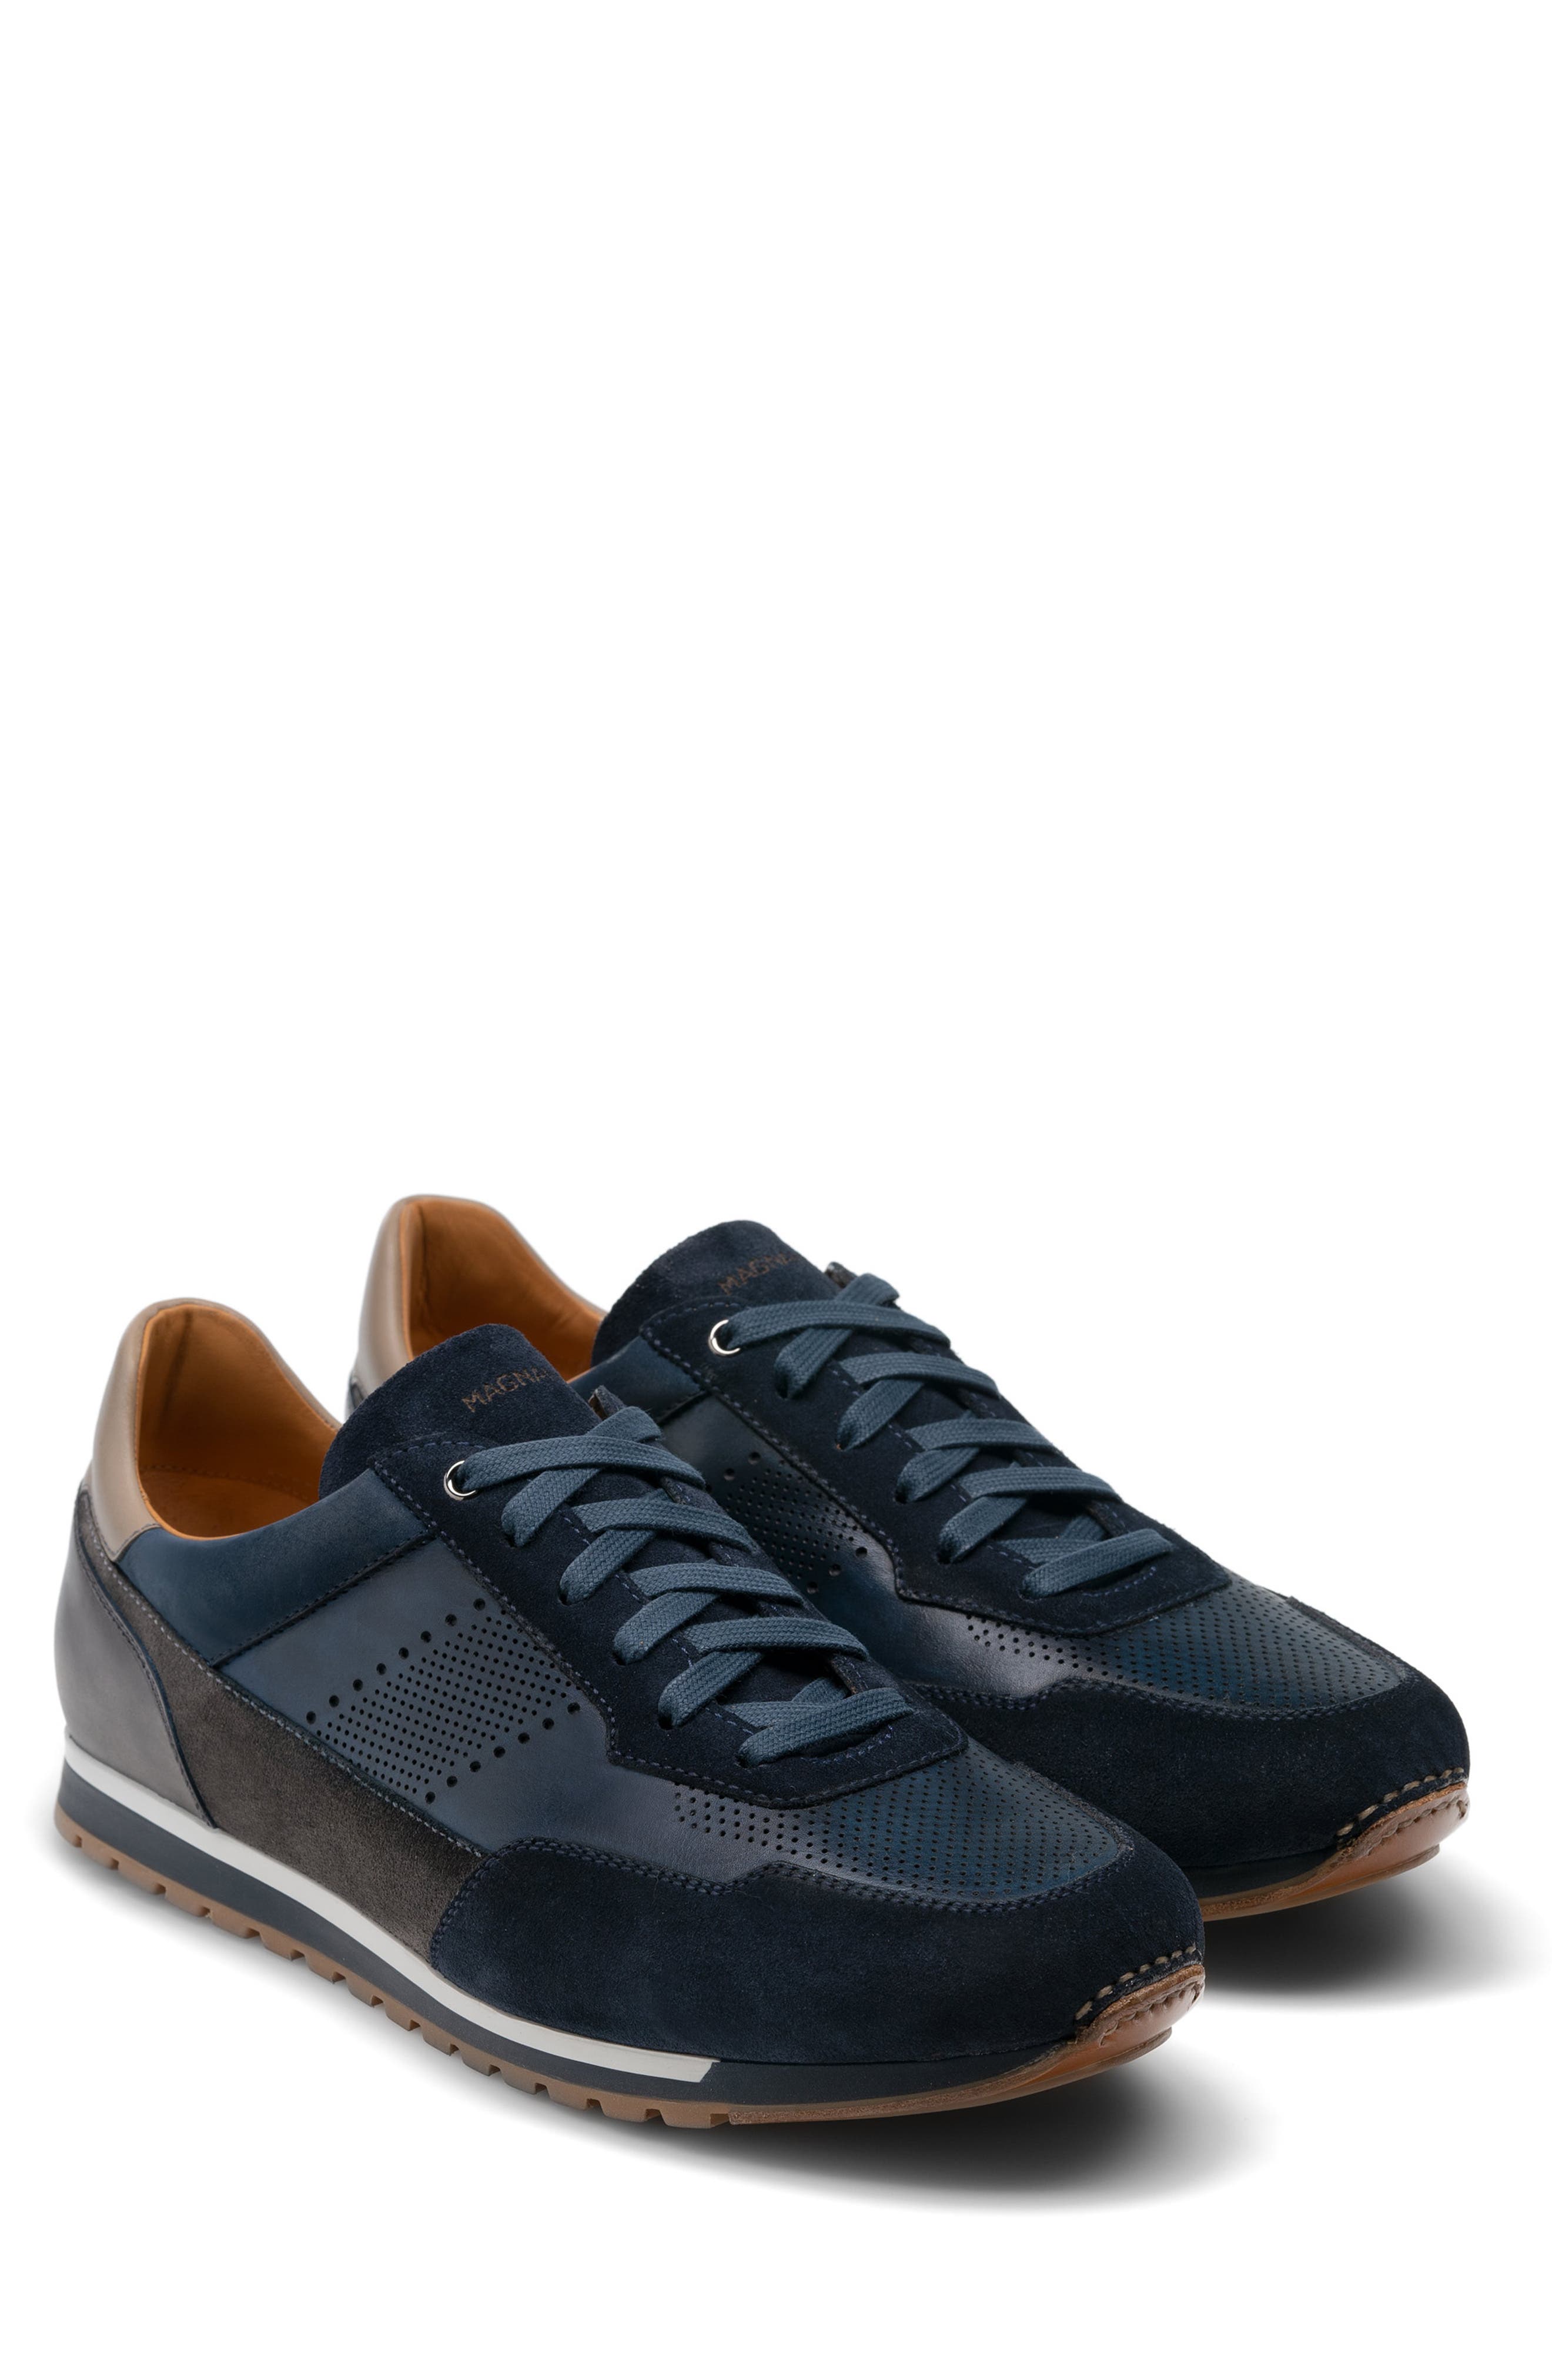 magnanni sneakers grey